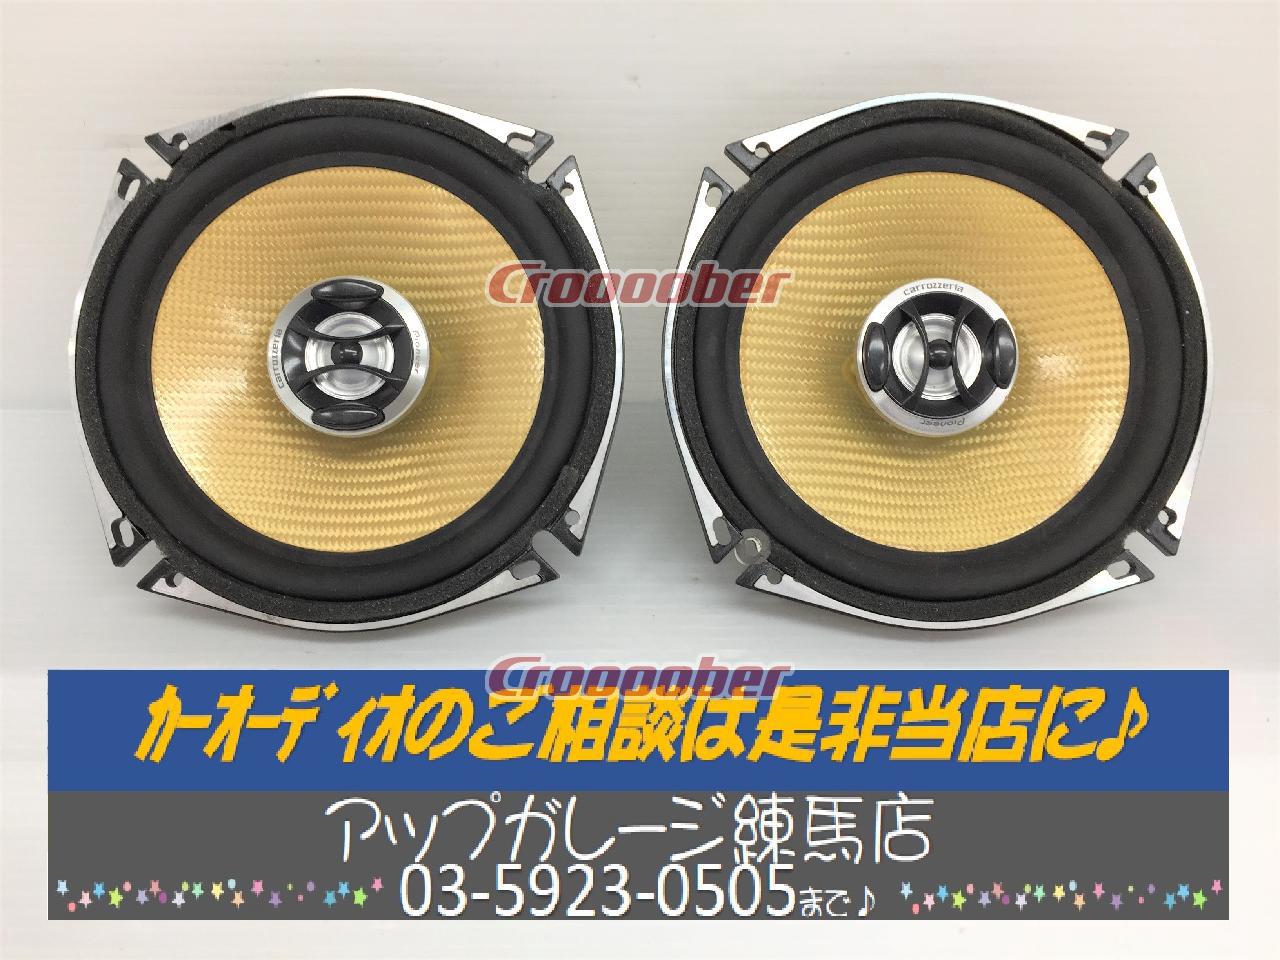 Carrozzeria TS-J1700A Sound Quality Improvement From Speaker